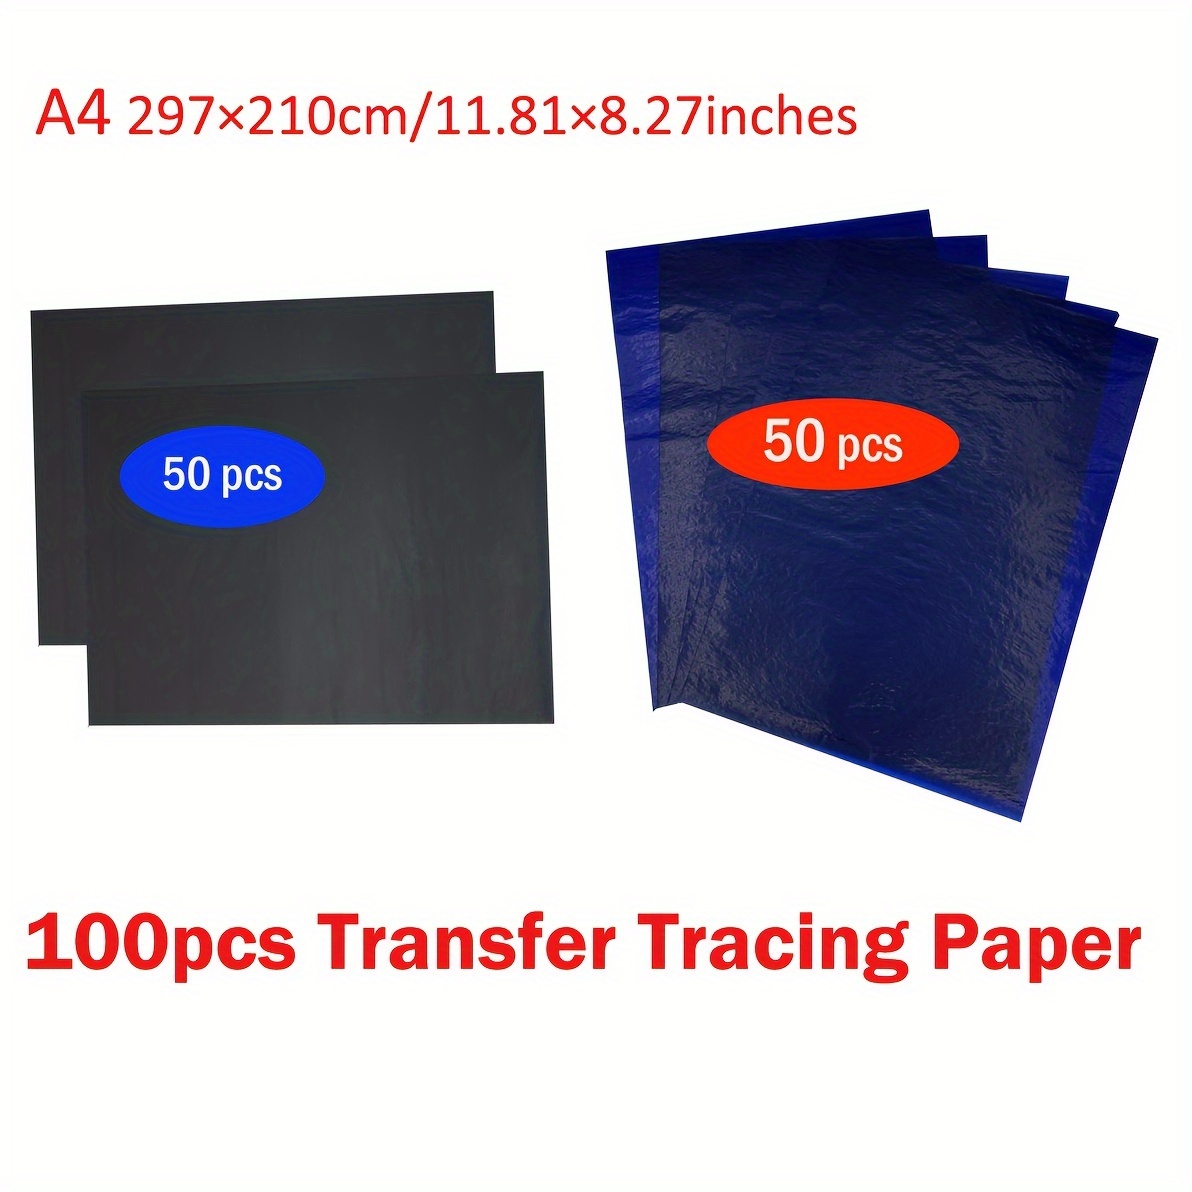 70g 80g 500 Sheets Inkjet A4 Paper Laser A4 White Copy Paper